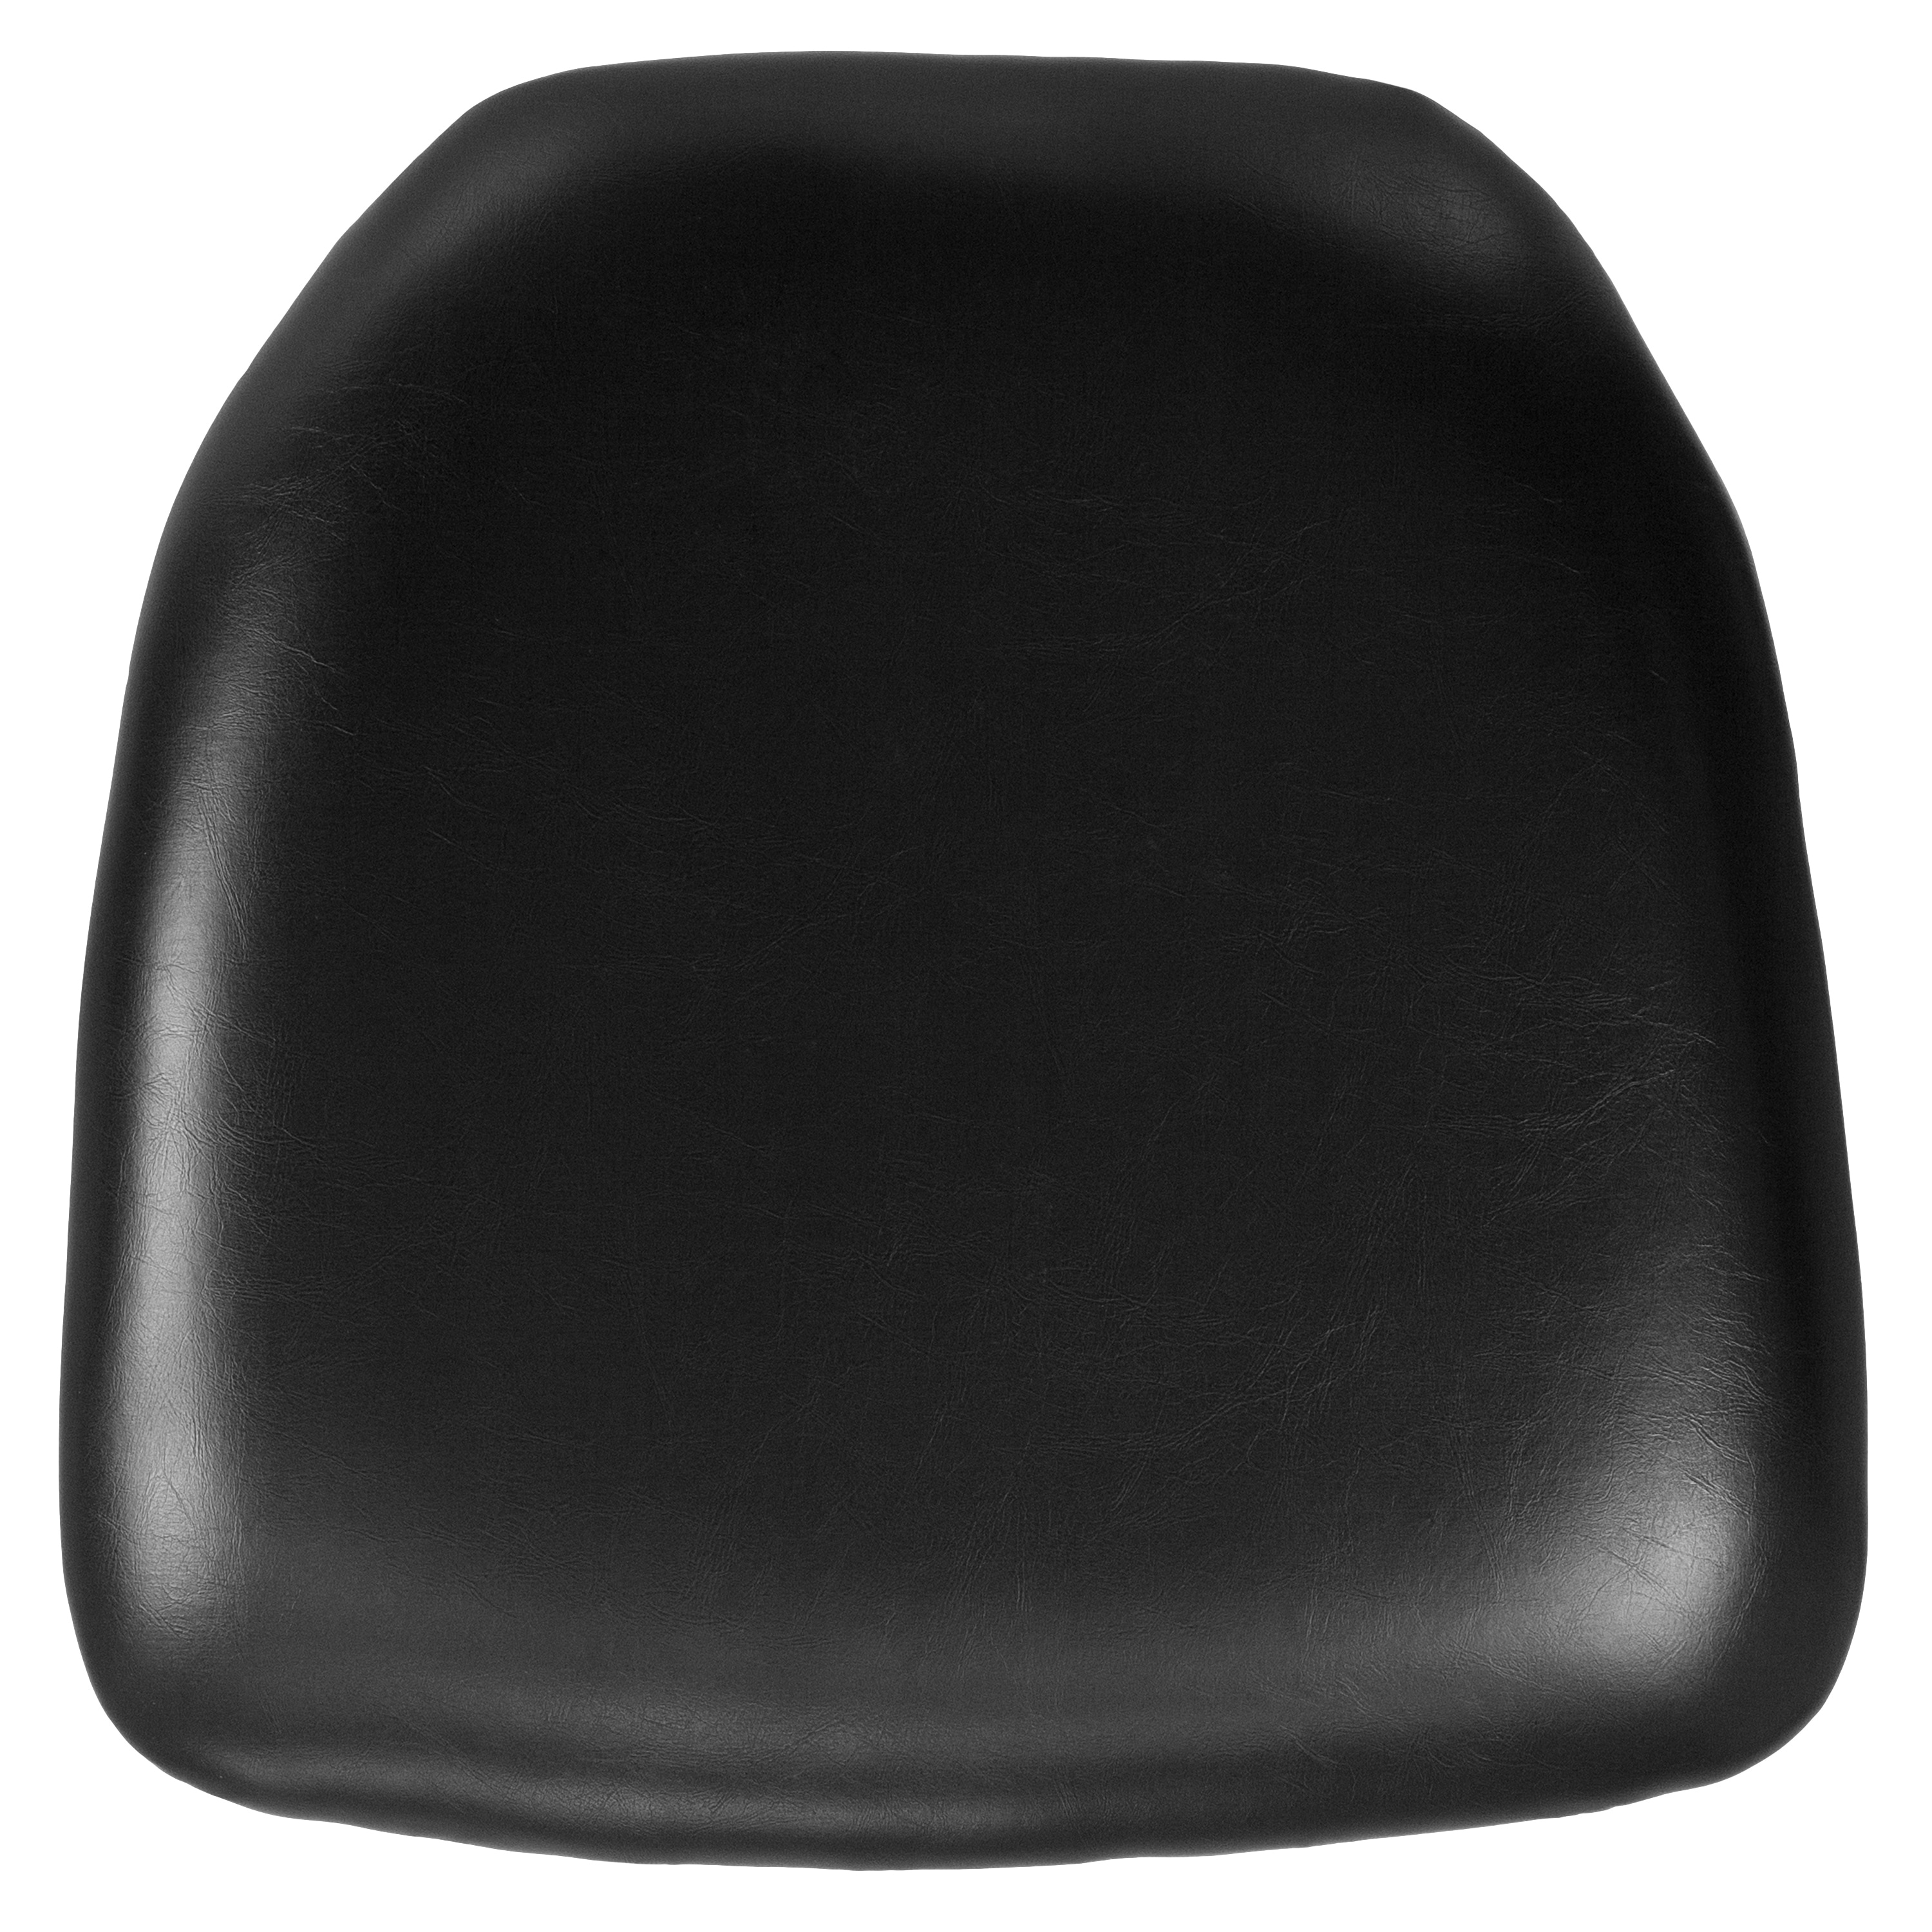 Flash Furniture Vinyl Upholstery Hard Chiavari Chair Cushion White - image 2 of 5